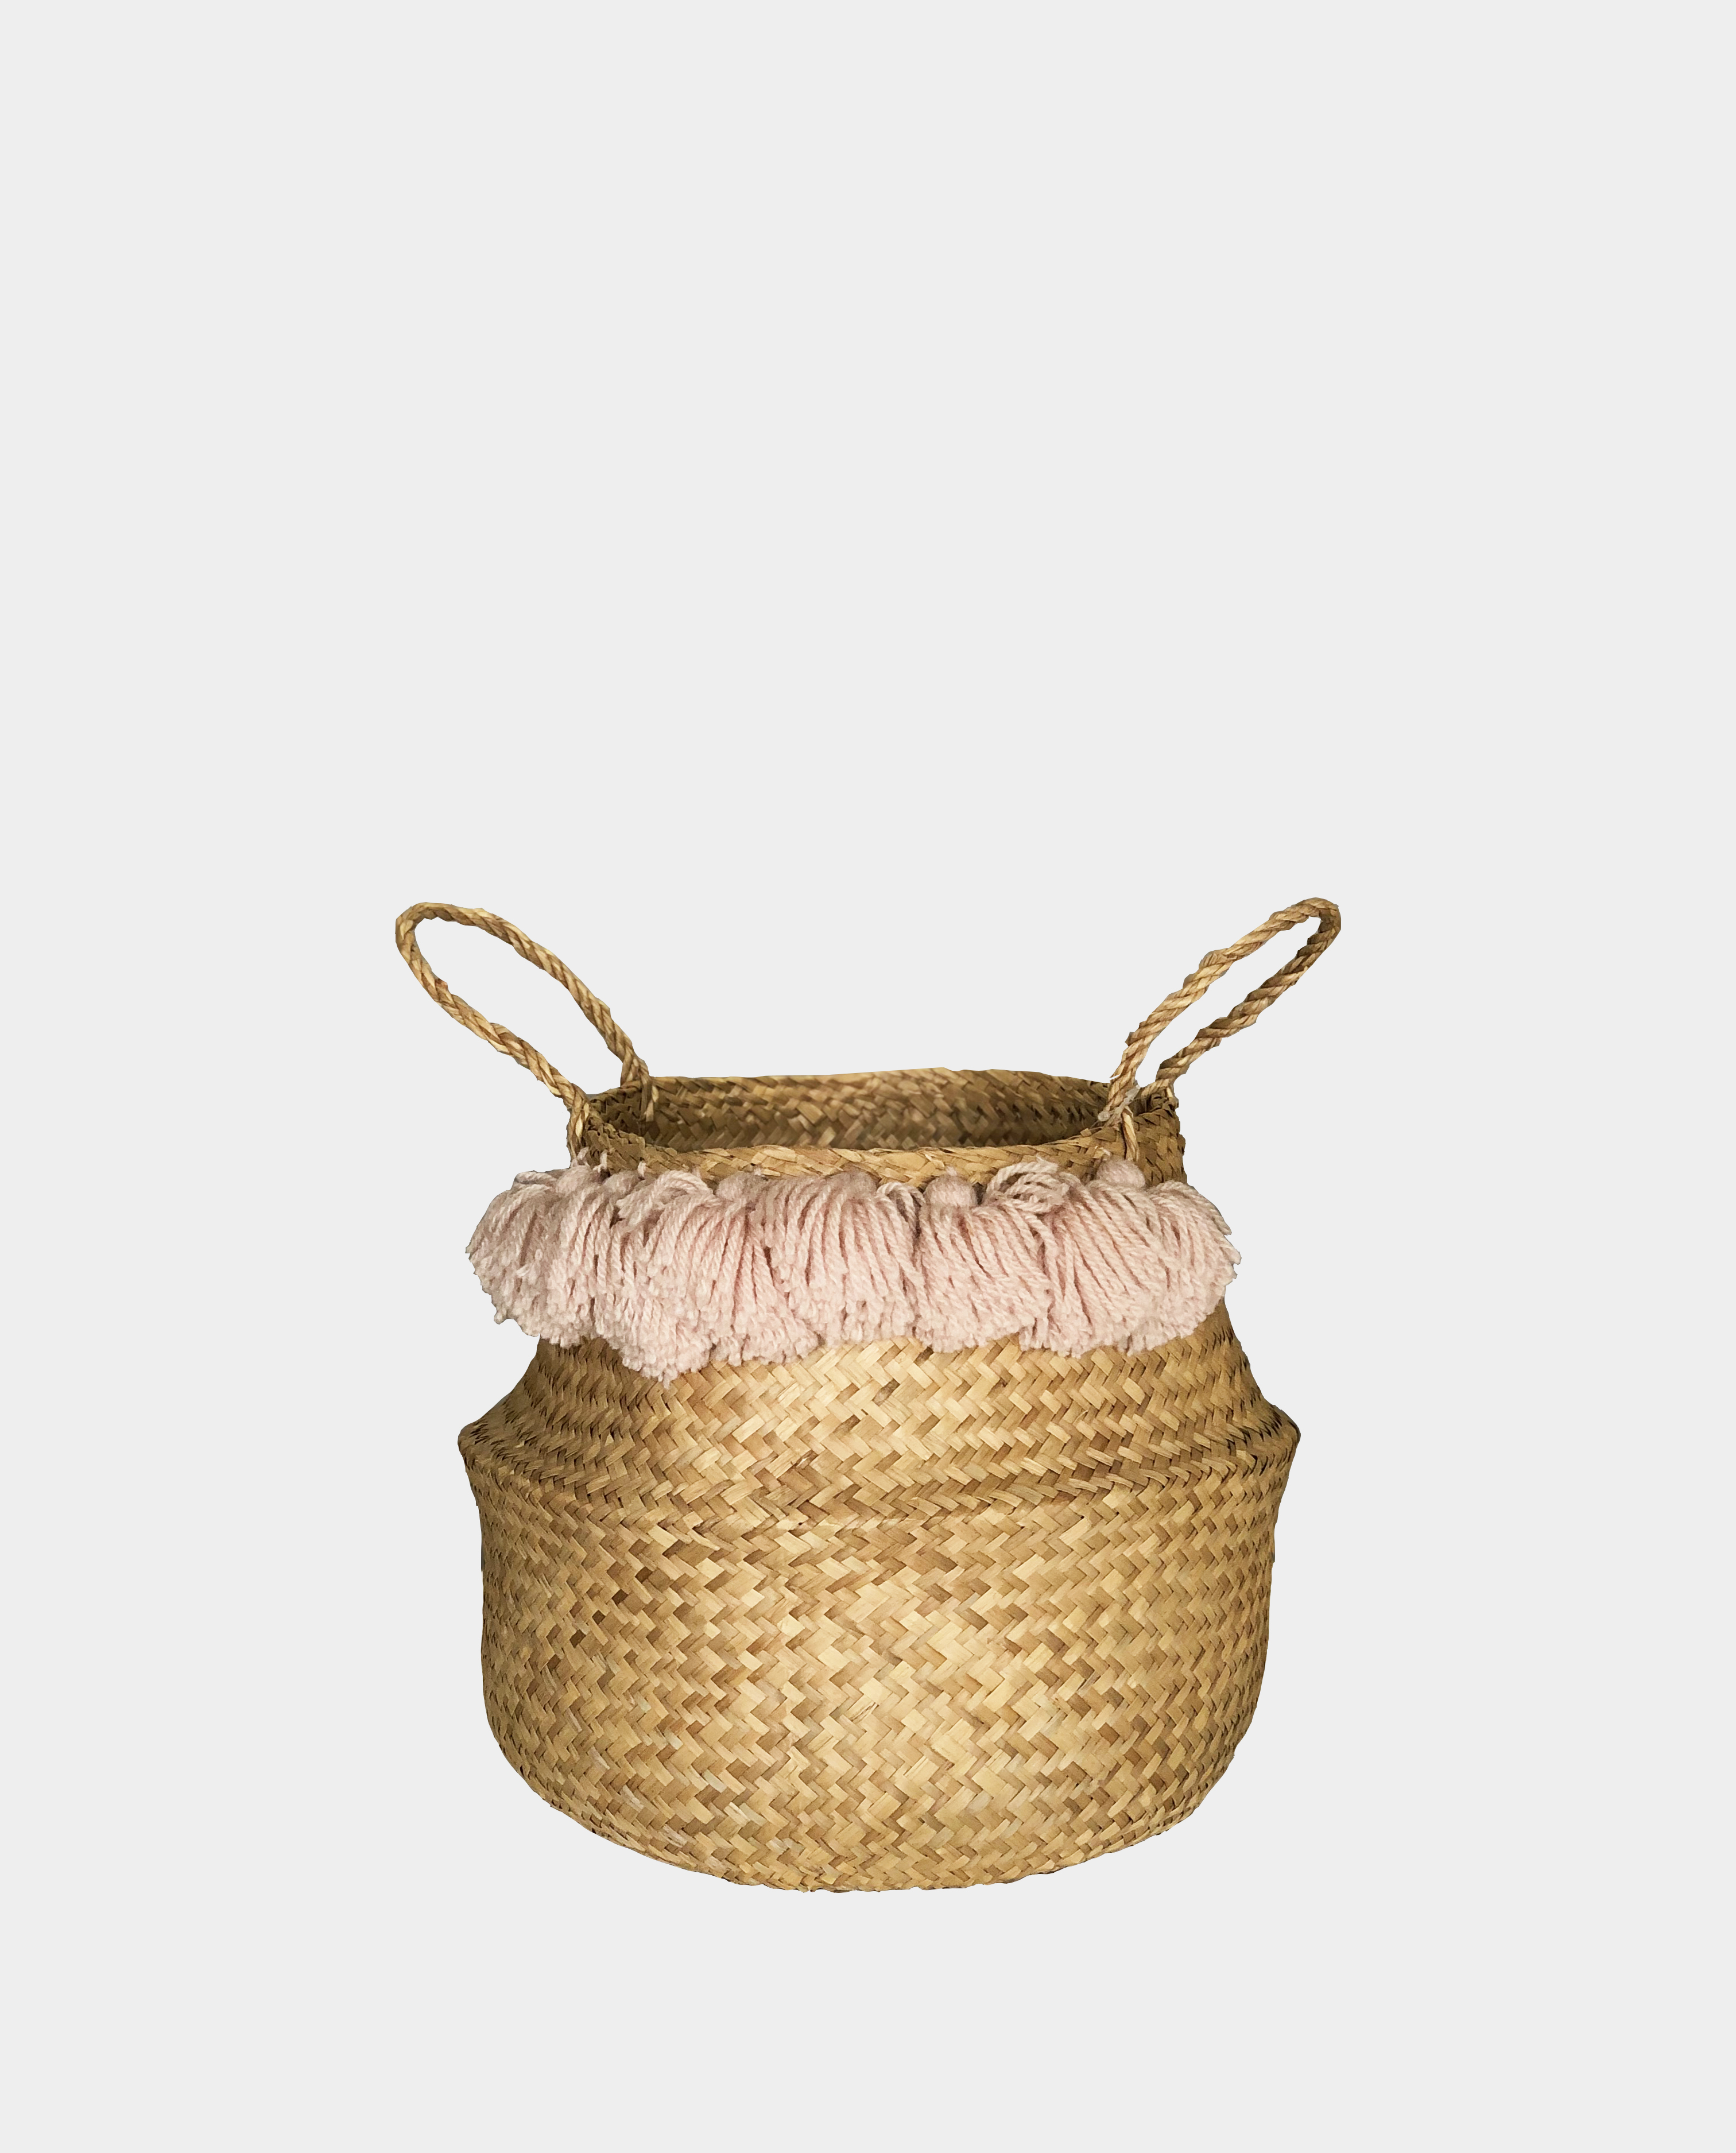 TASMANIA Seagrass Belly Basket with Pink Tassels